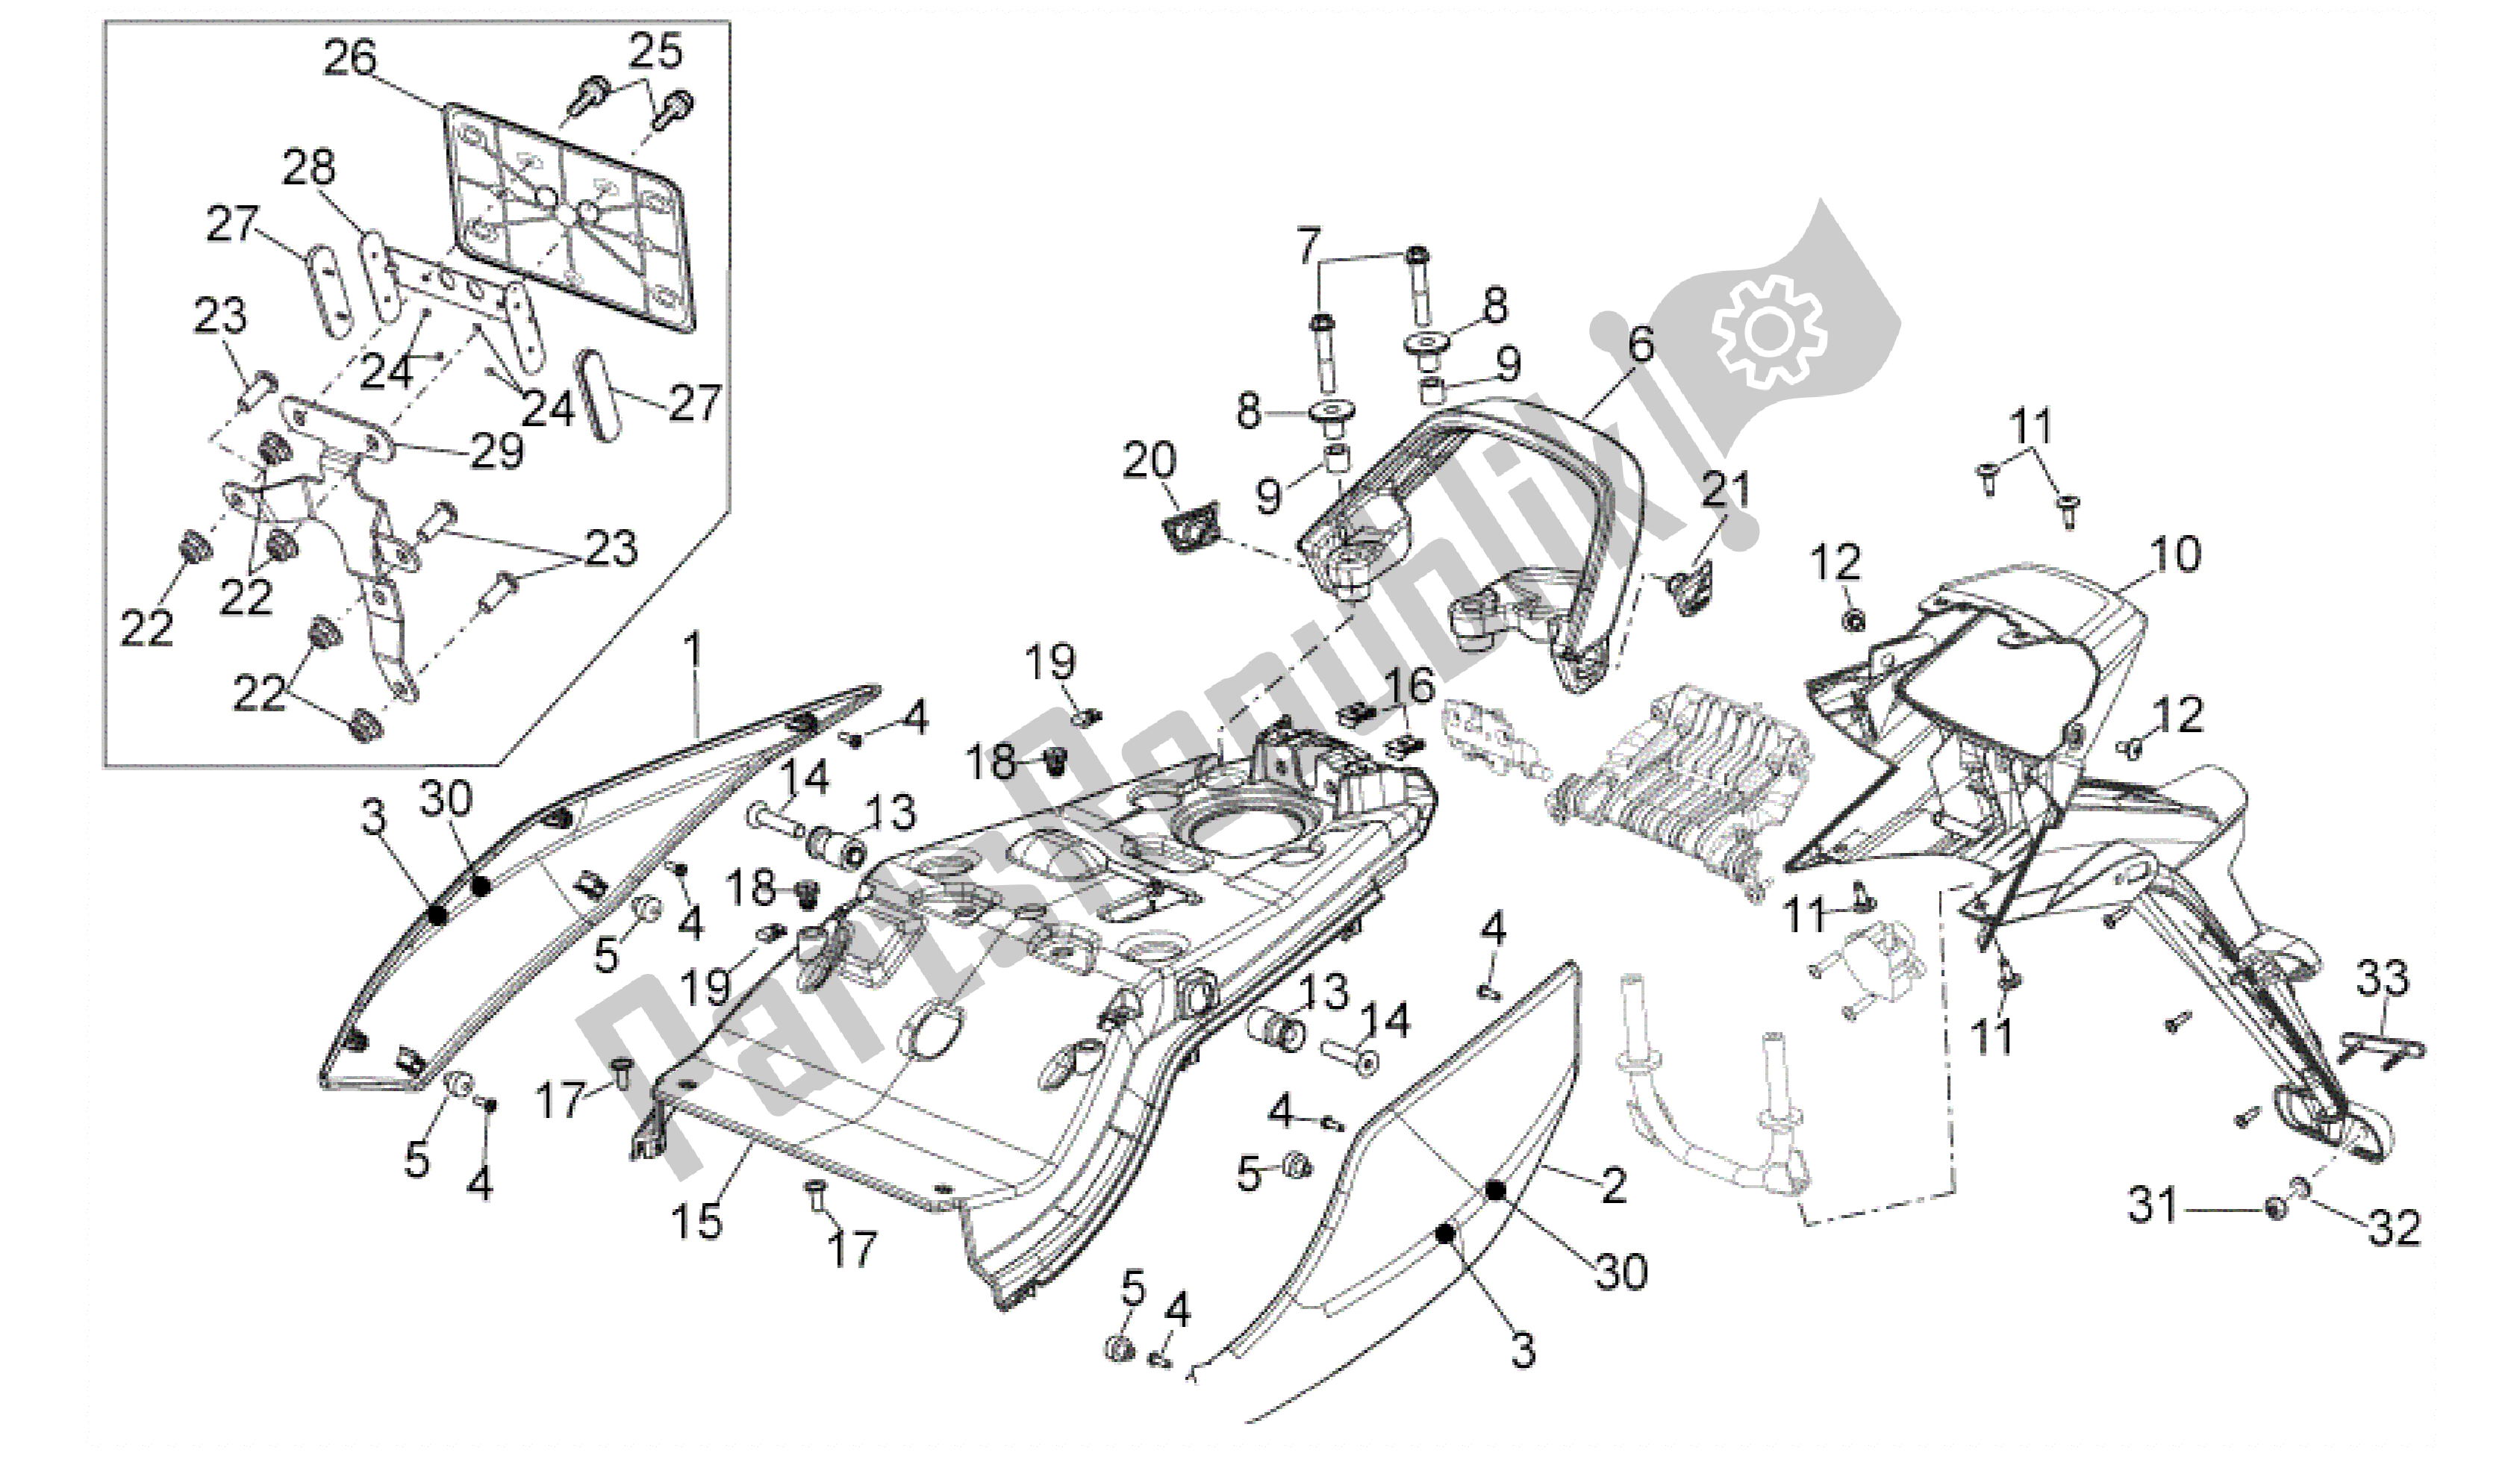 All parts for the Rear Body of the Aprilia Mana 850 2009 - 2011